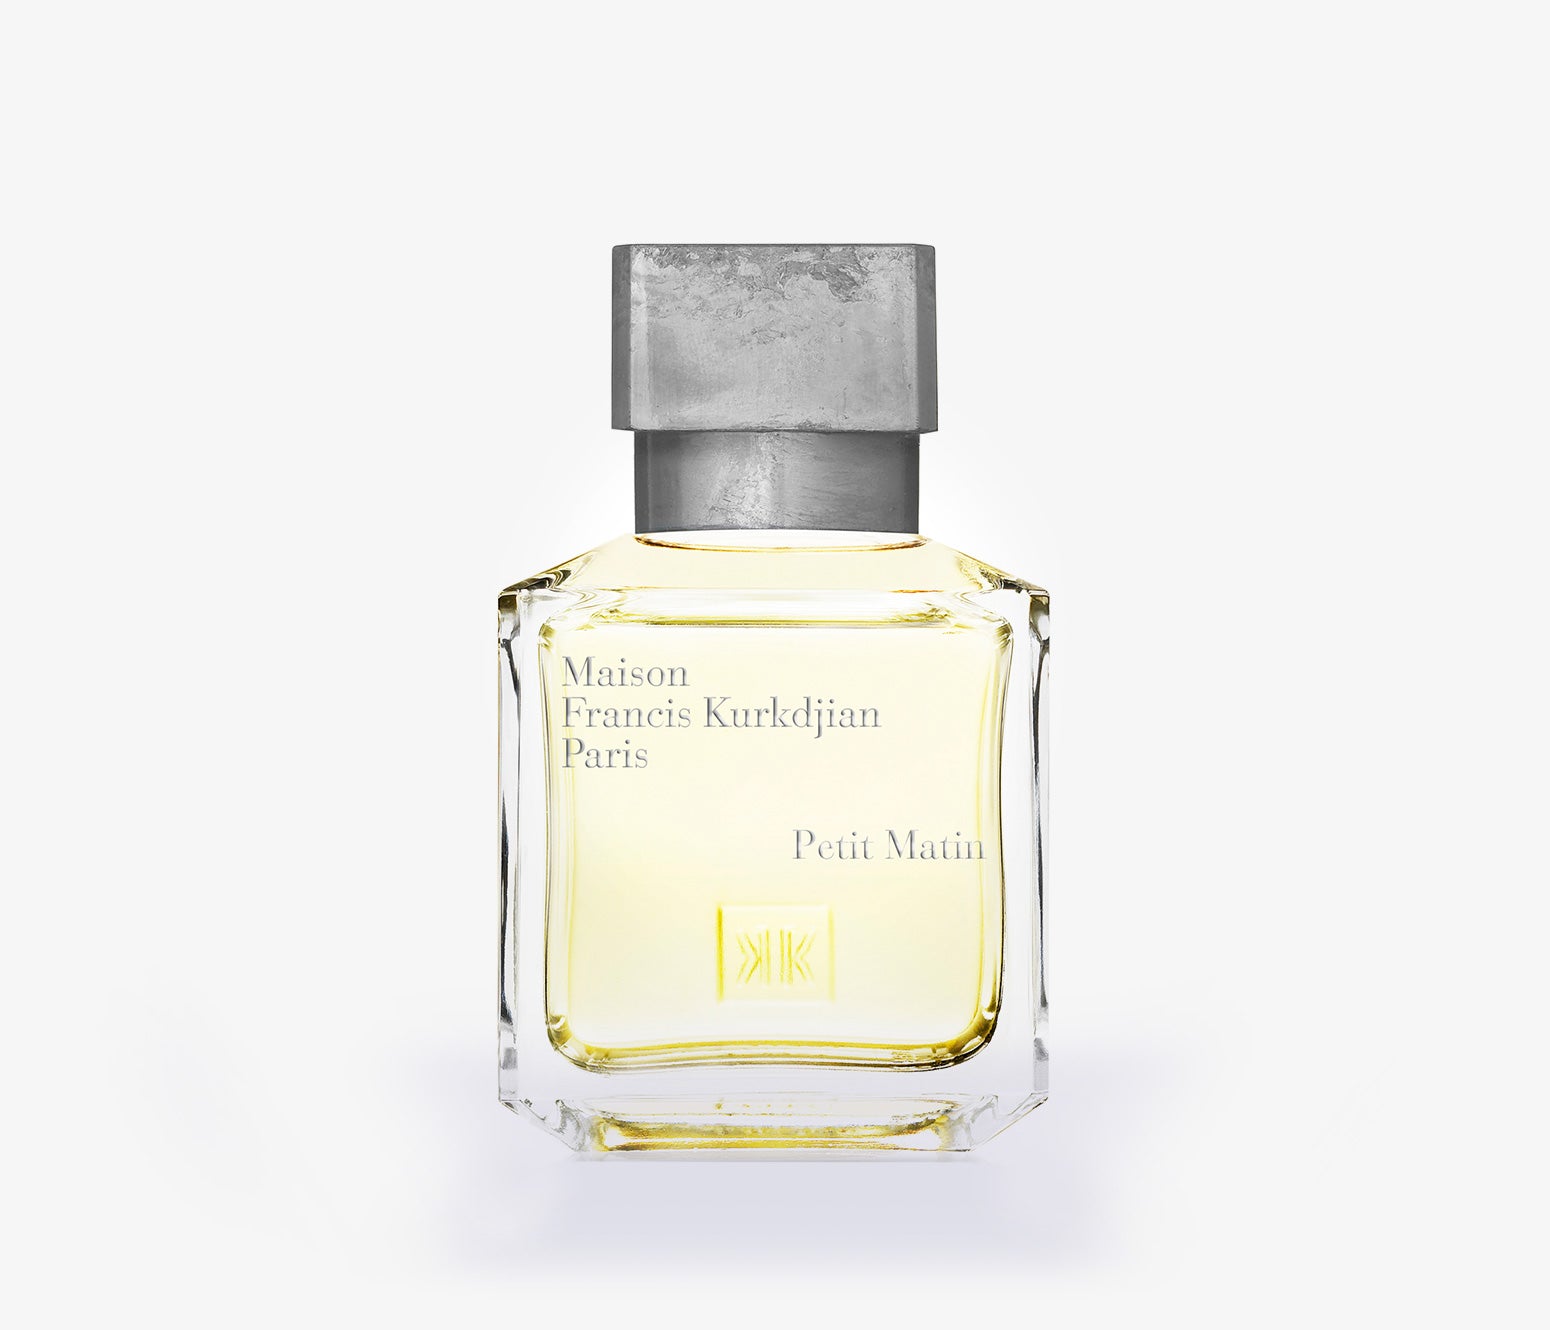 Maison Francis Kurkdjian - Petit Matin - 70ml - EOC001 - Product Image - Fragrance - Les Senteurs